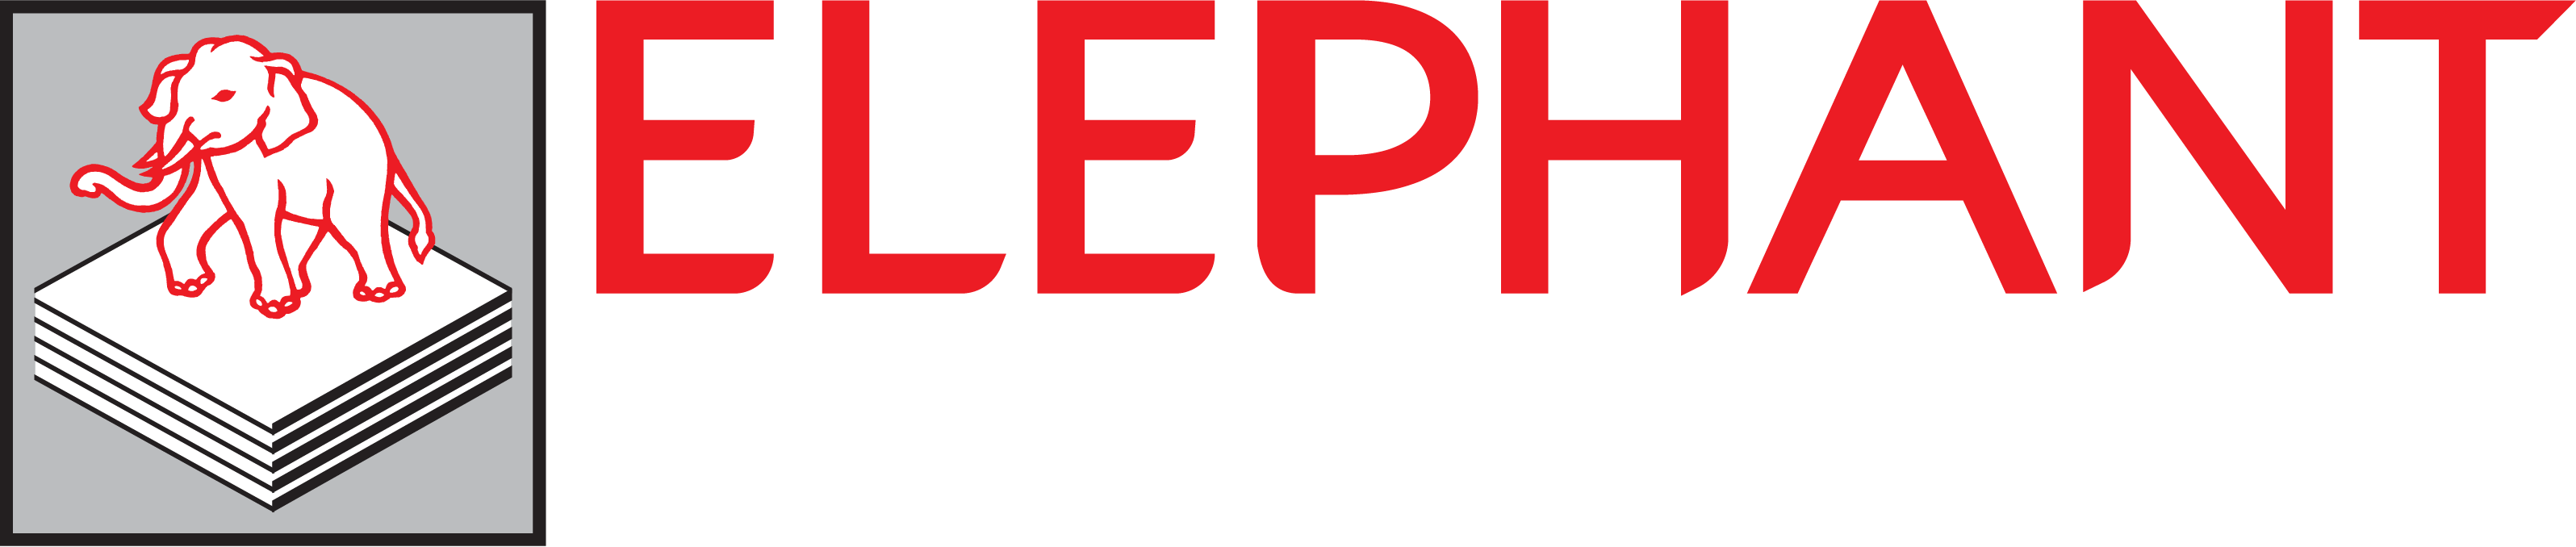 Elephant Gypsum Board logo for Zmartbuild PNG